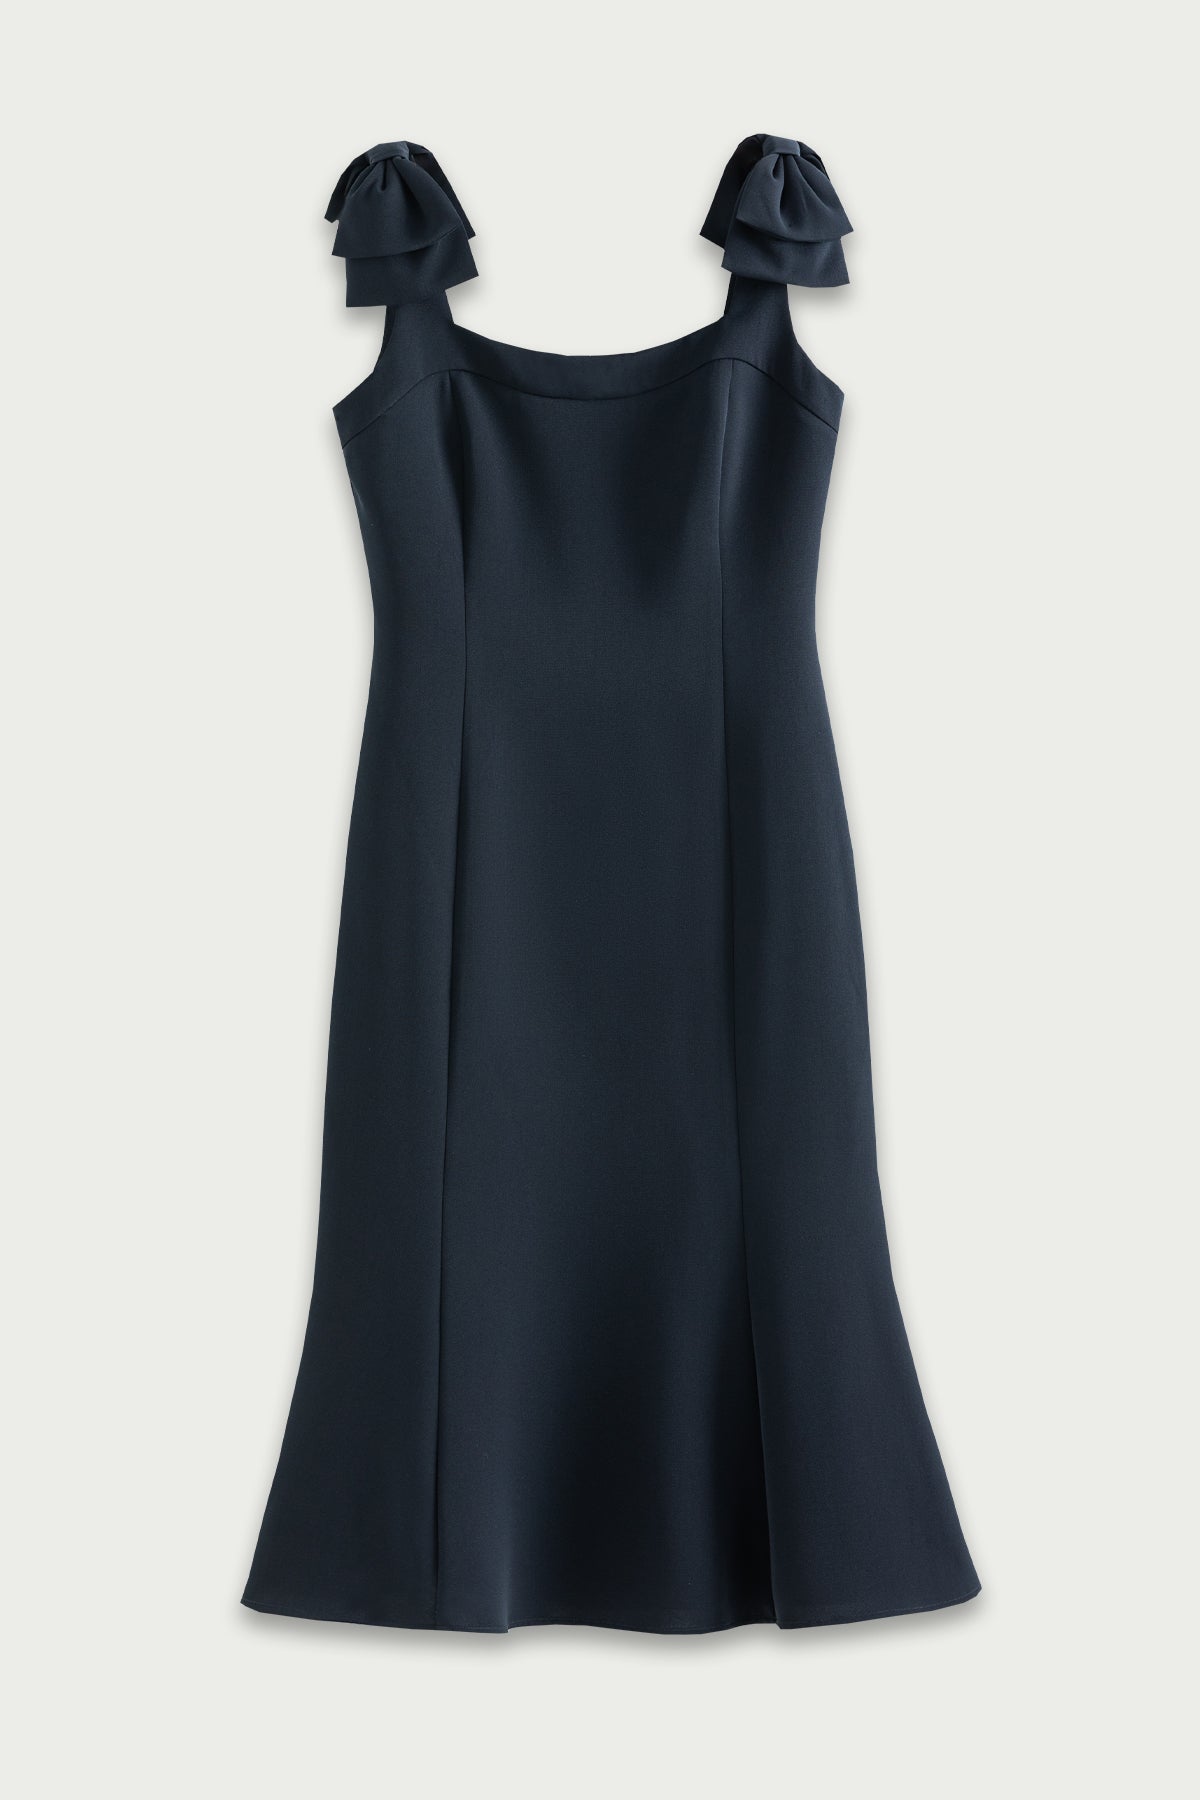 Fansilanen | Charla Black Bow Sleeveless Dress